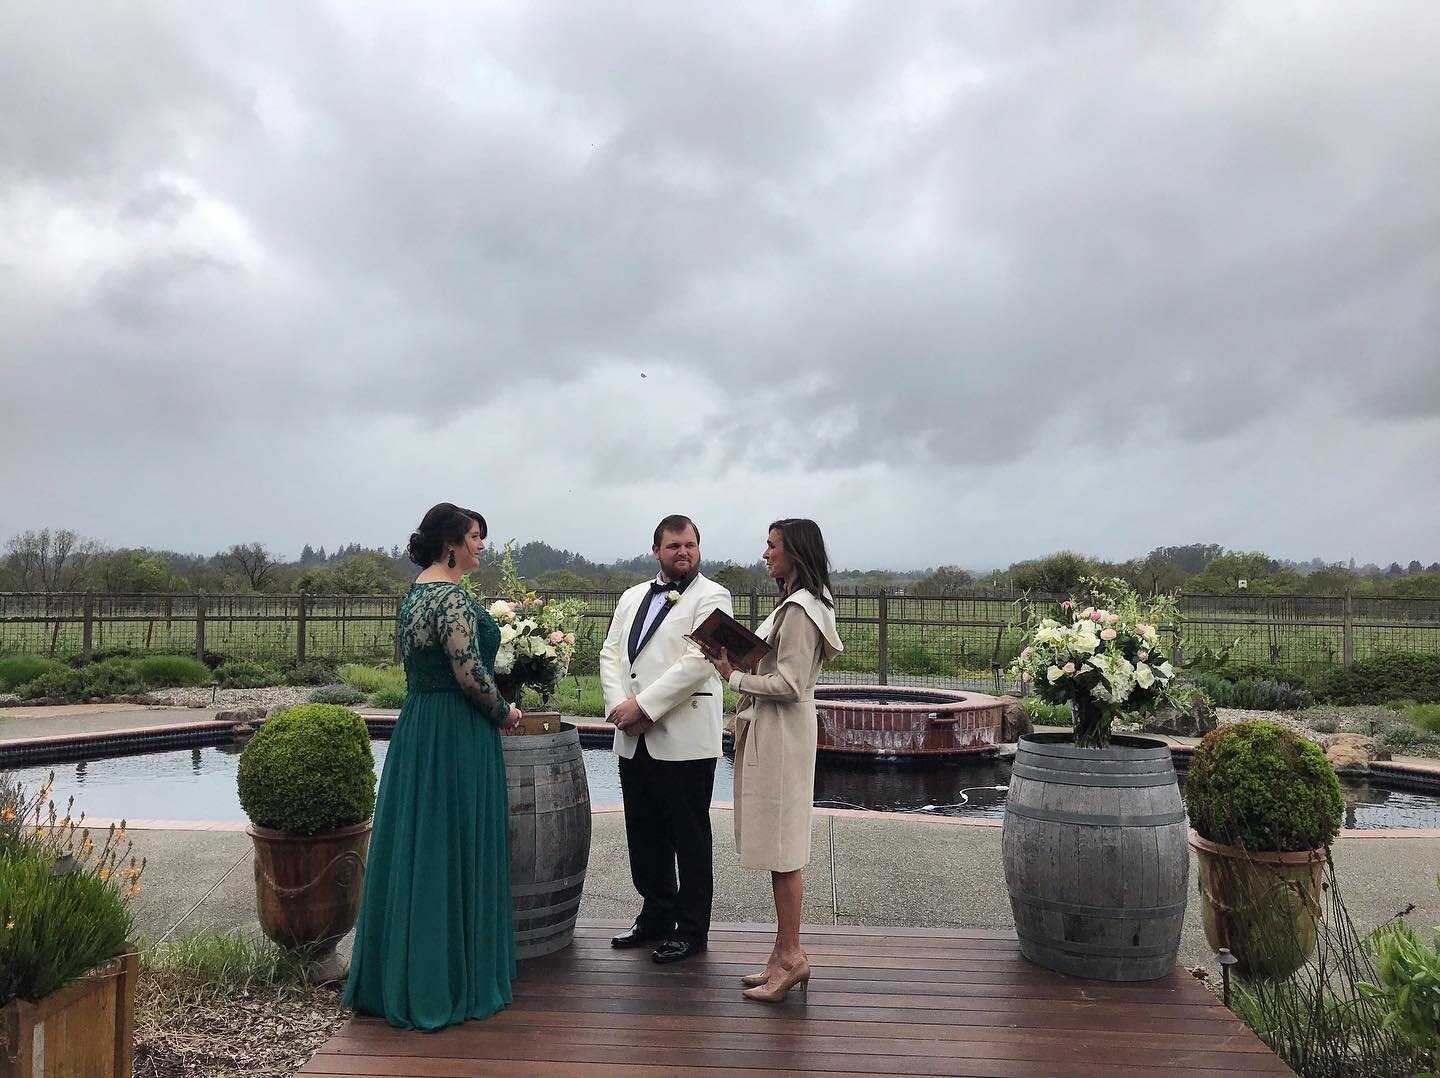 Green dress, grey skies, and tons of LOVE#elopement #covidlove #covidwedding  #sonomacountywedding #winecountrywedding #uniqueweddingdress #sonomaofficiant